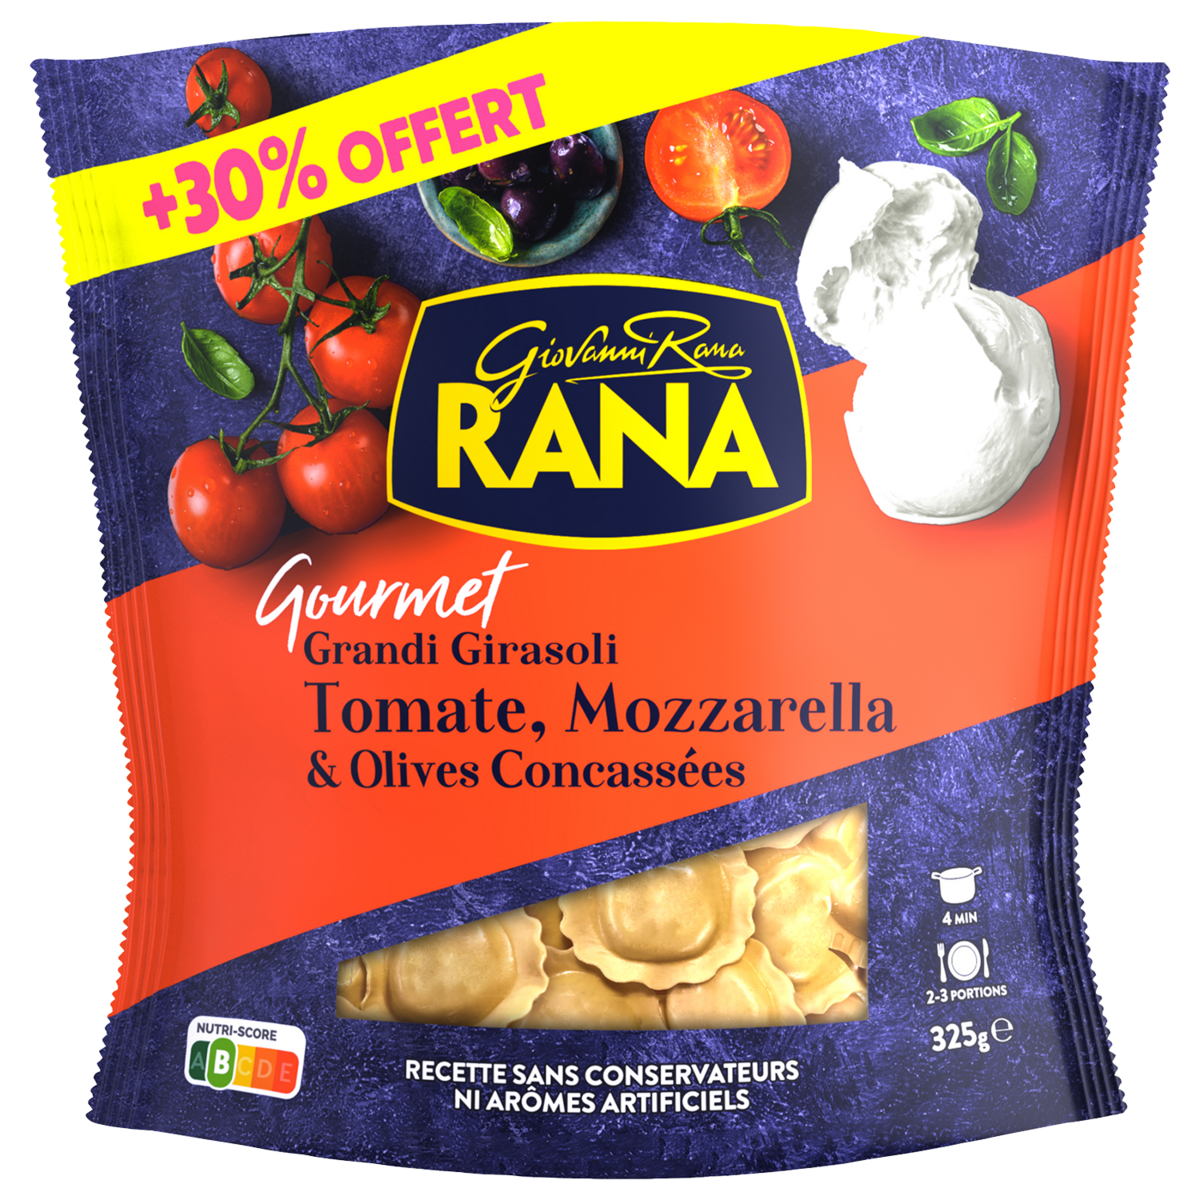 RANA Grand girasoli tomate mozzarella et olives concassées dont 30% offert 325g